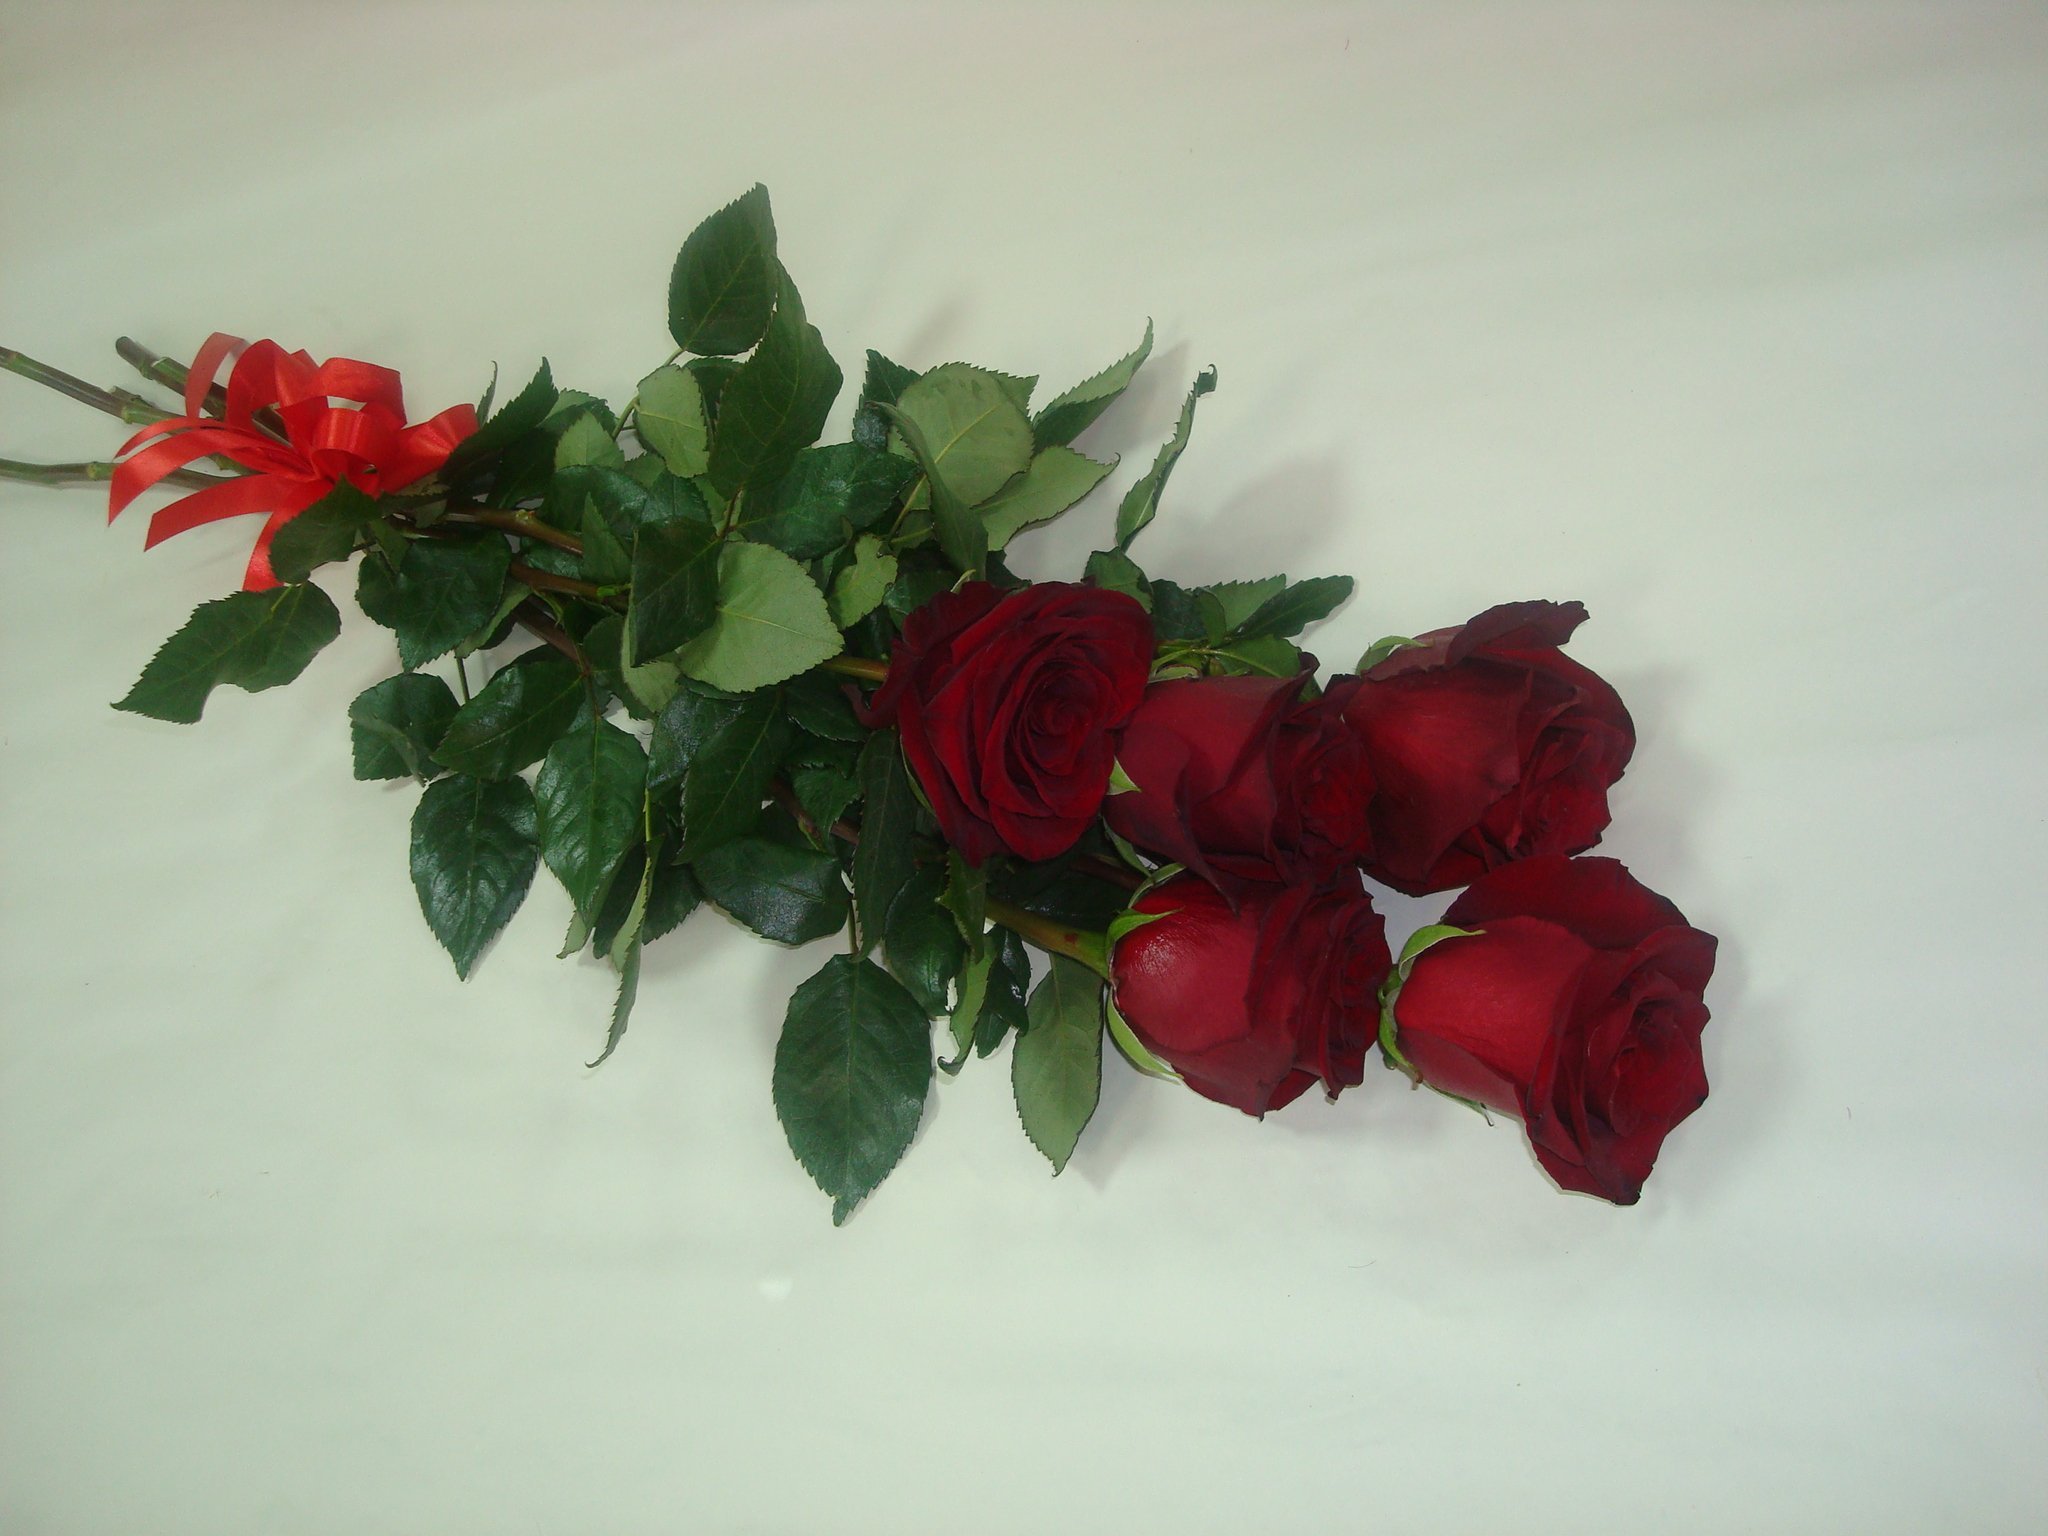 три розы на столе